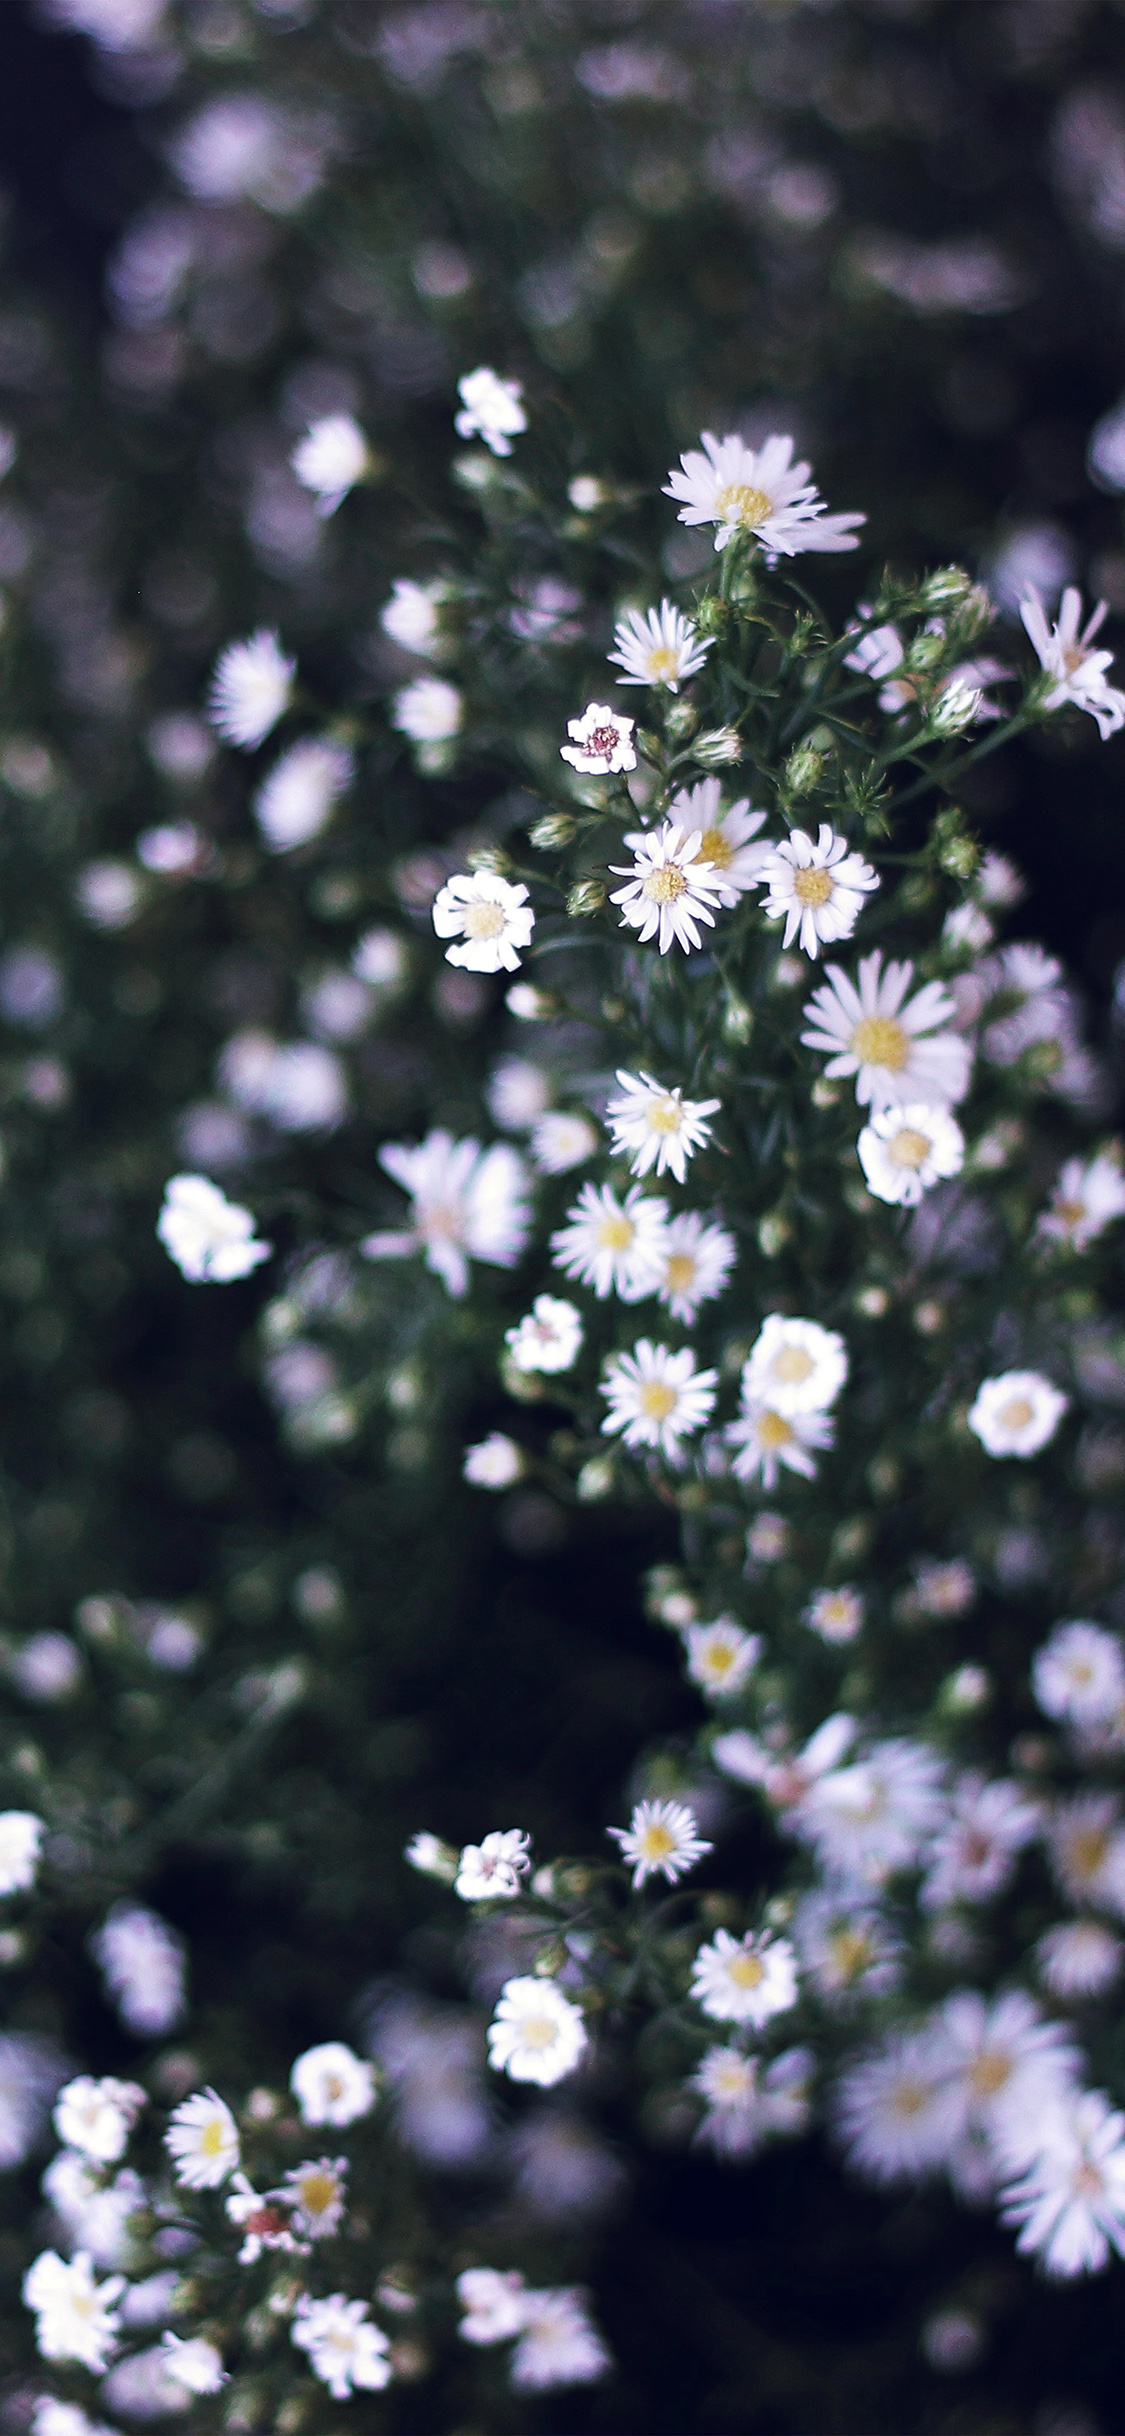 iPhone X wallpaper. flower white spring nature bluish